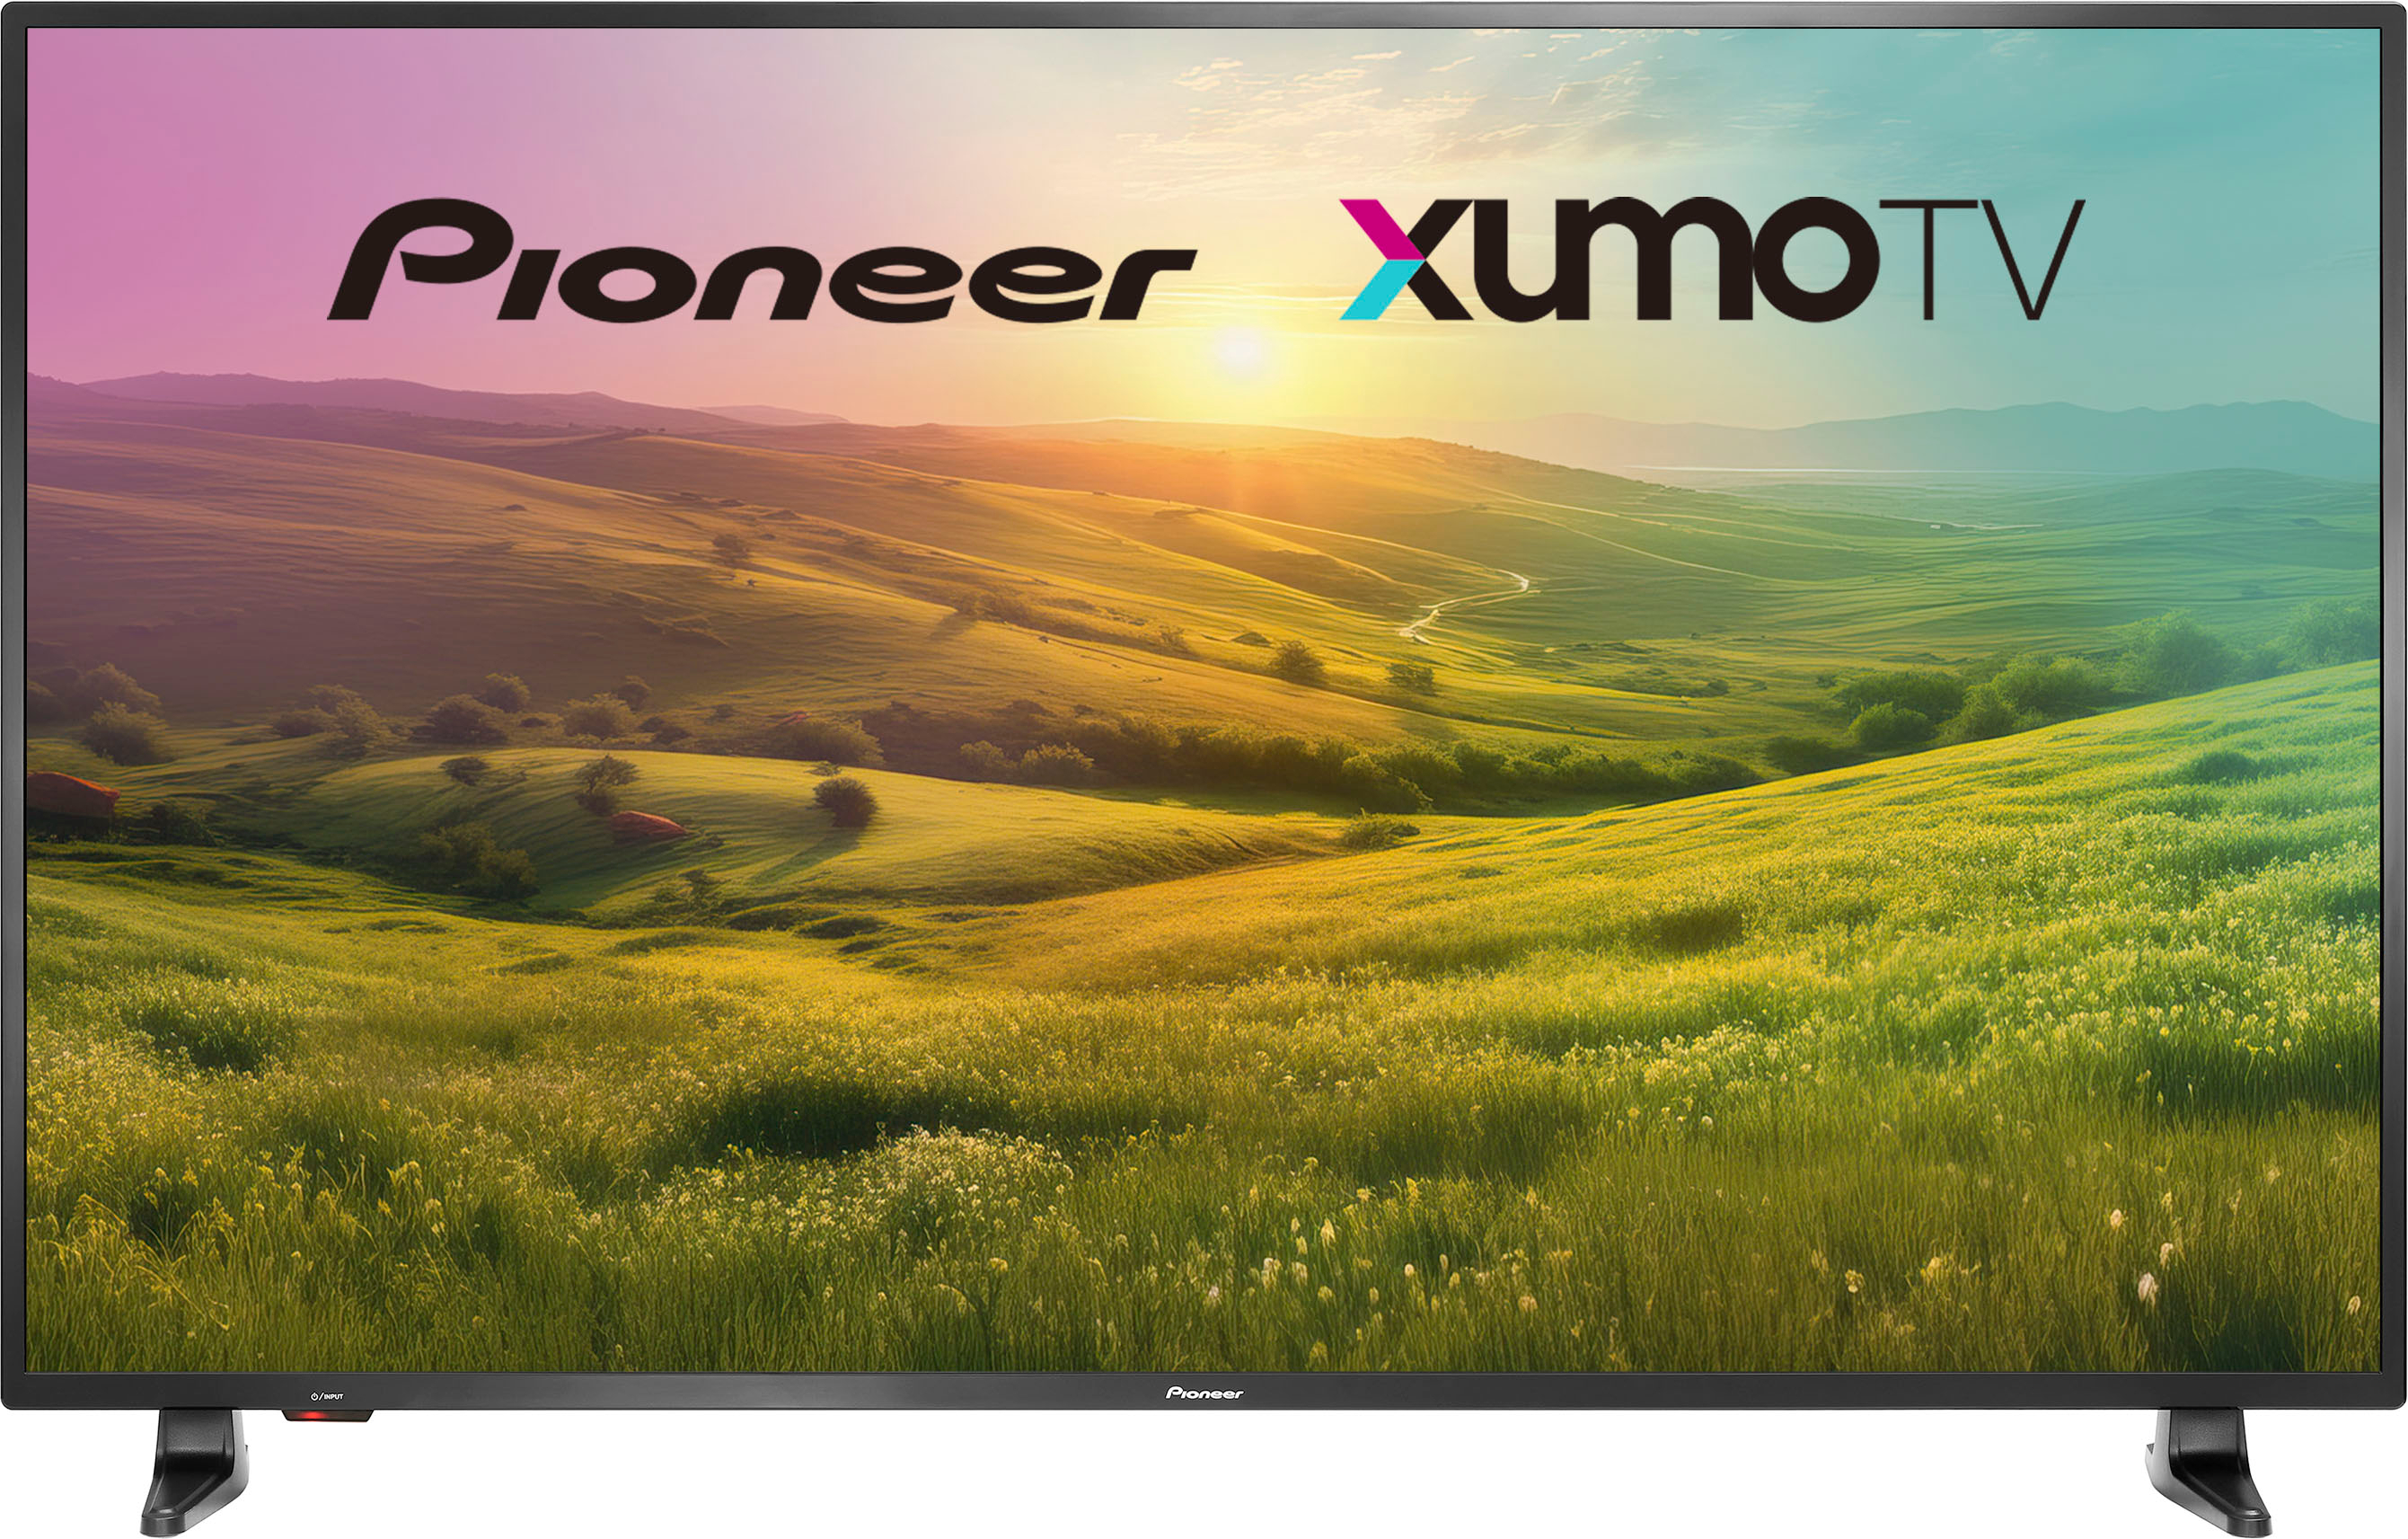 55" Pioneer 4K UHD LED Smart Xumo HDTV $199.99 + Free Delivery @ Best Buy